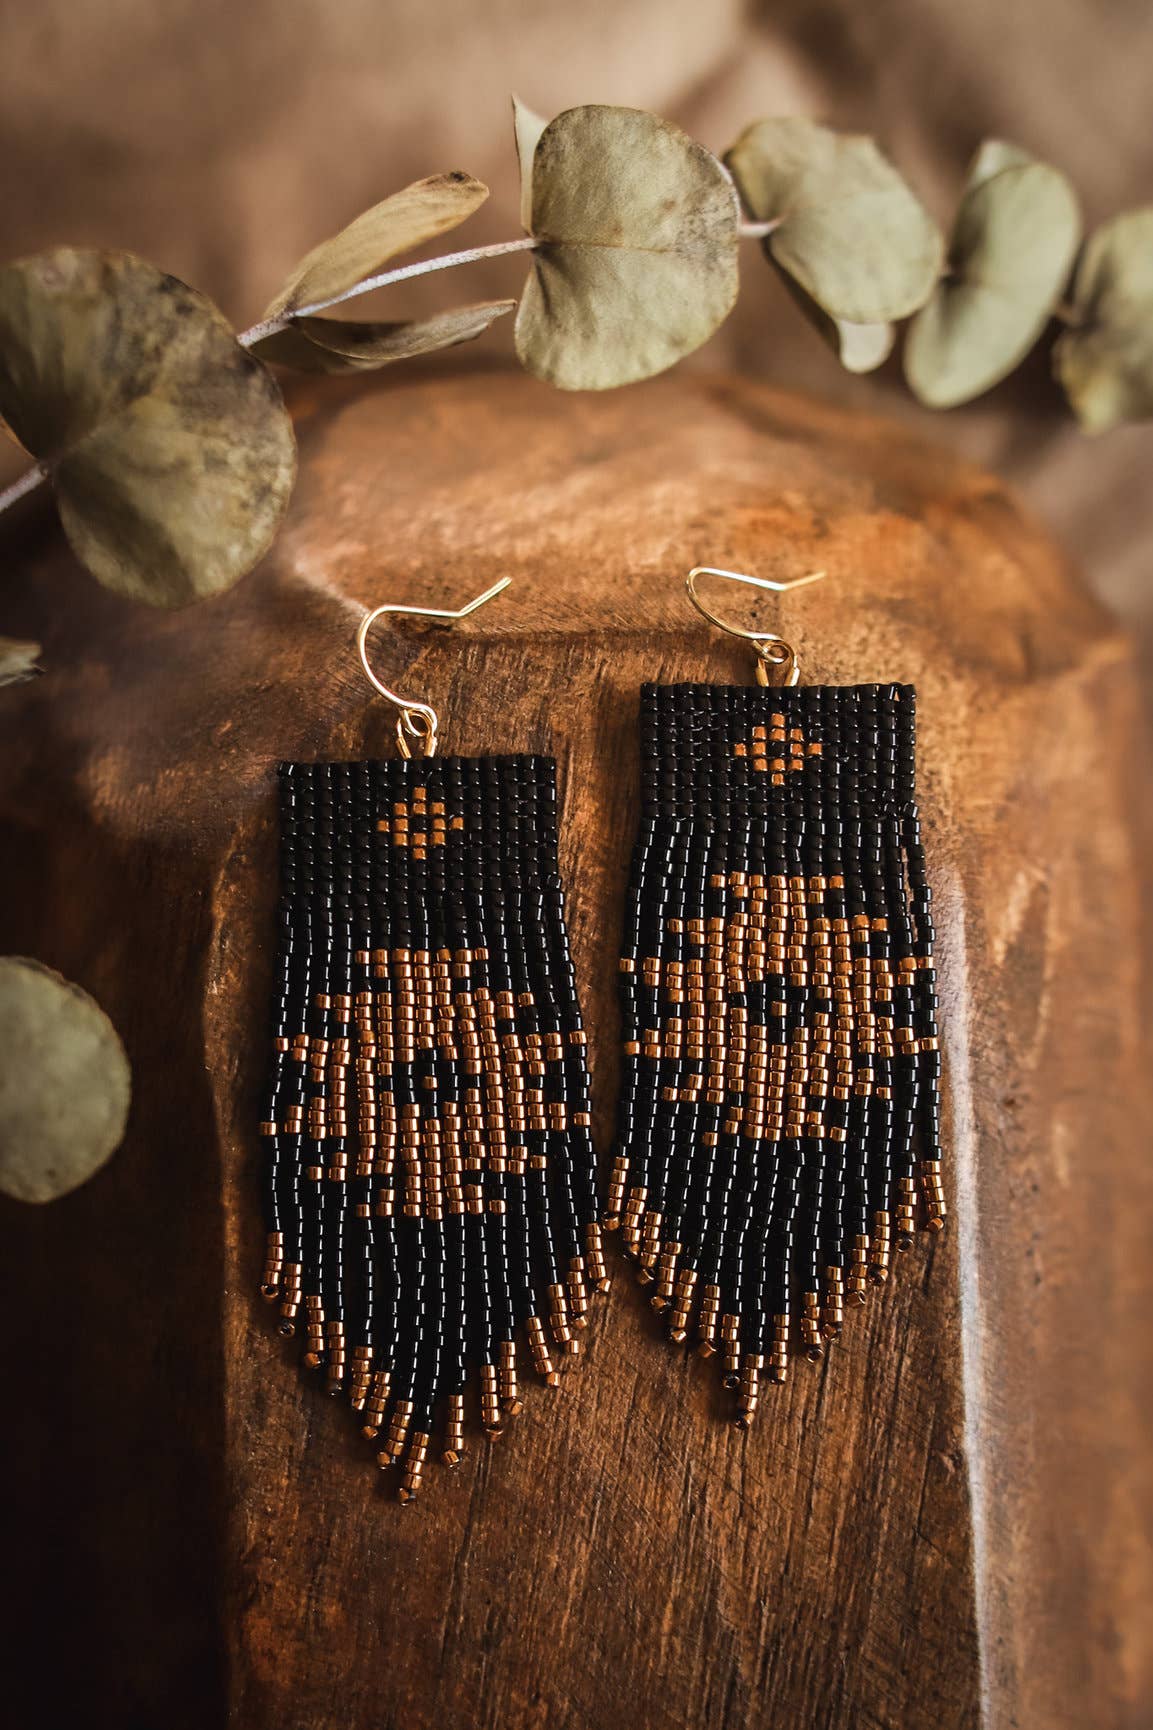 Mayana Designs Co | Beaded Handwoven Tribal Fringe Earrings (Black/Bronze)